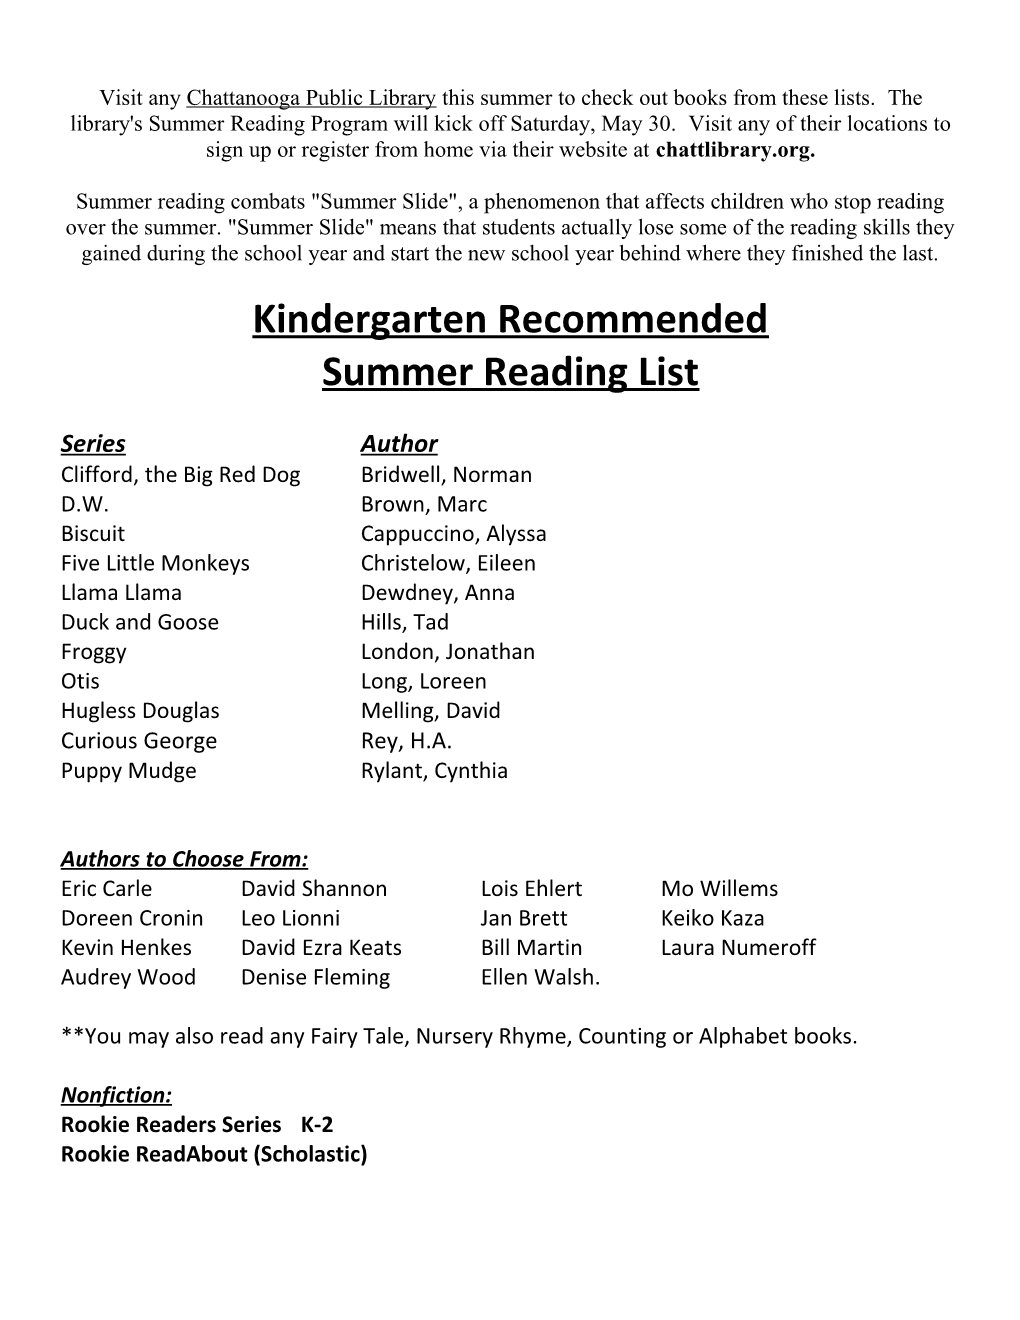 Kindergarten Recommended